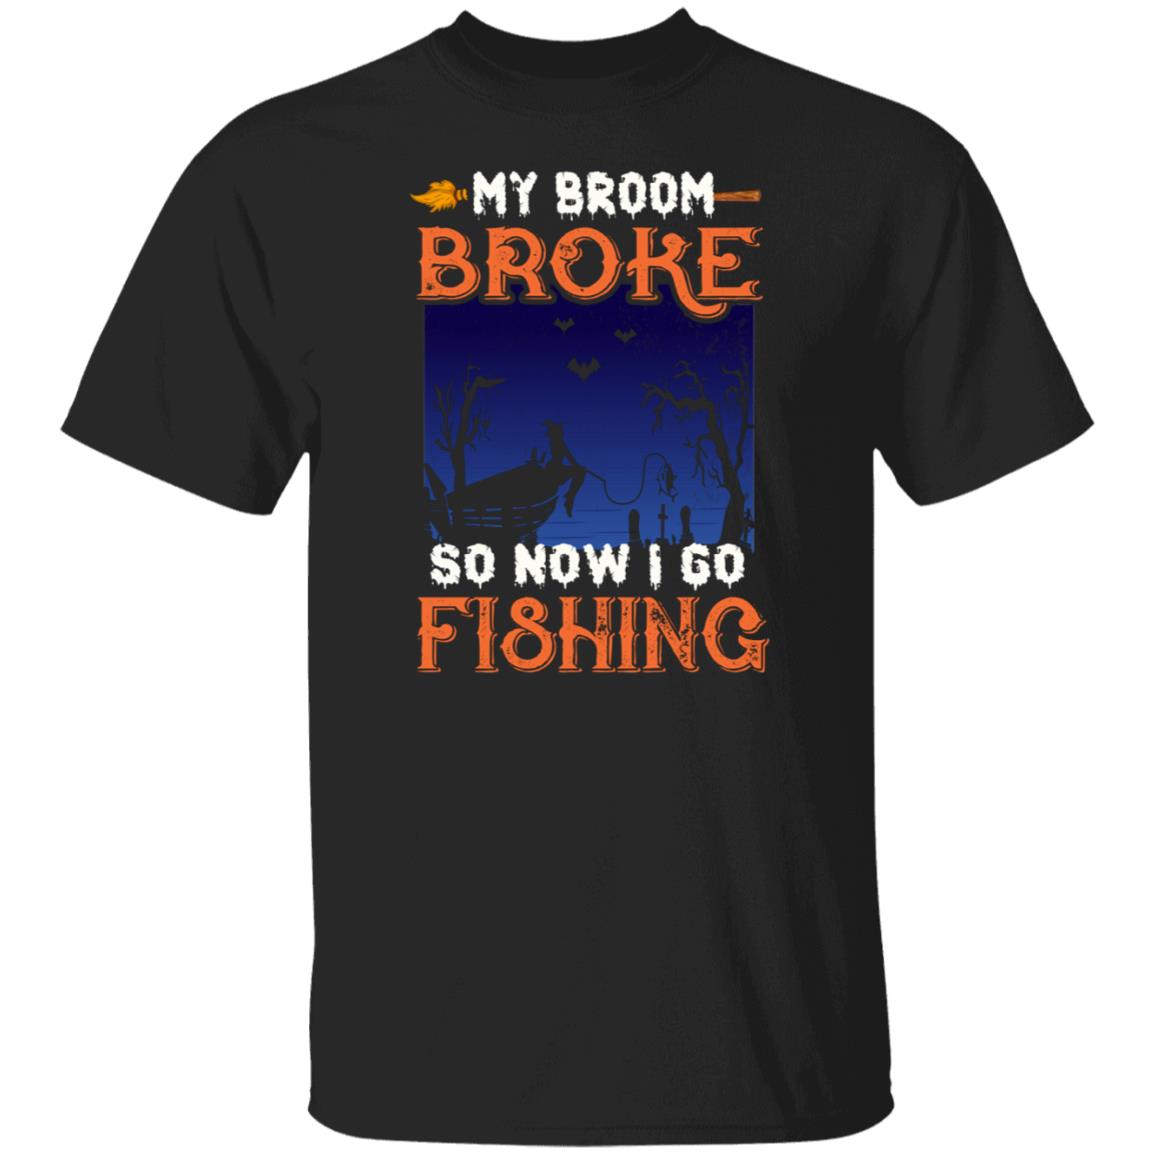 Funny Fishing Shirts Halloween, My Broom Broke So Now I Go Fishing